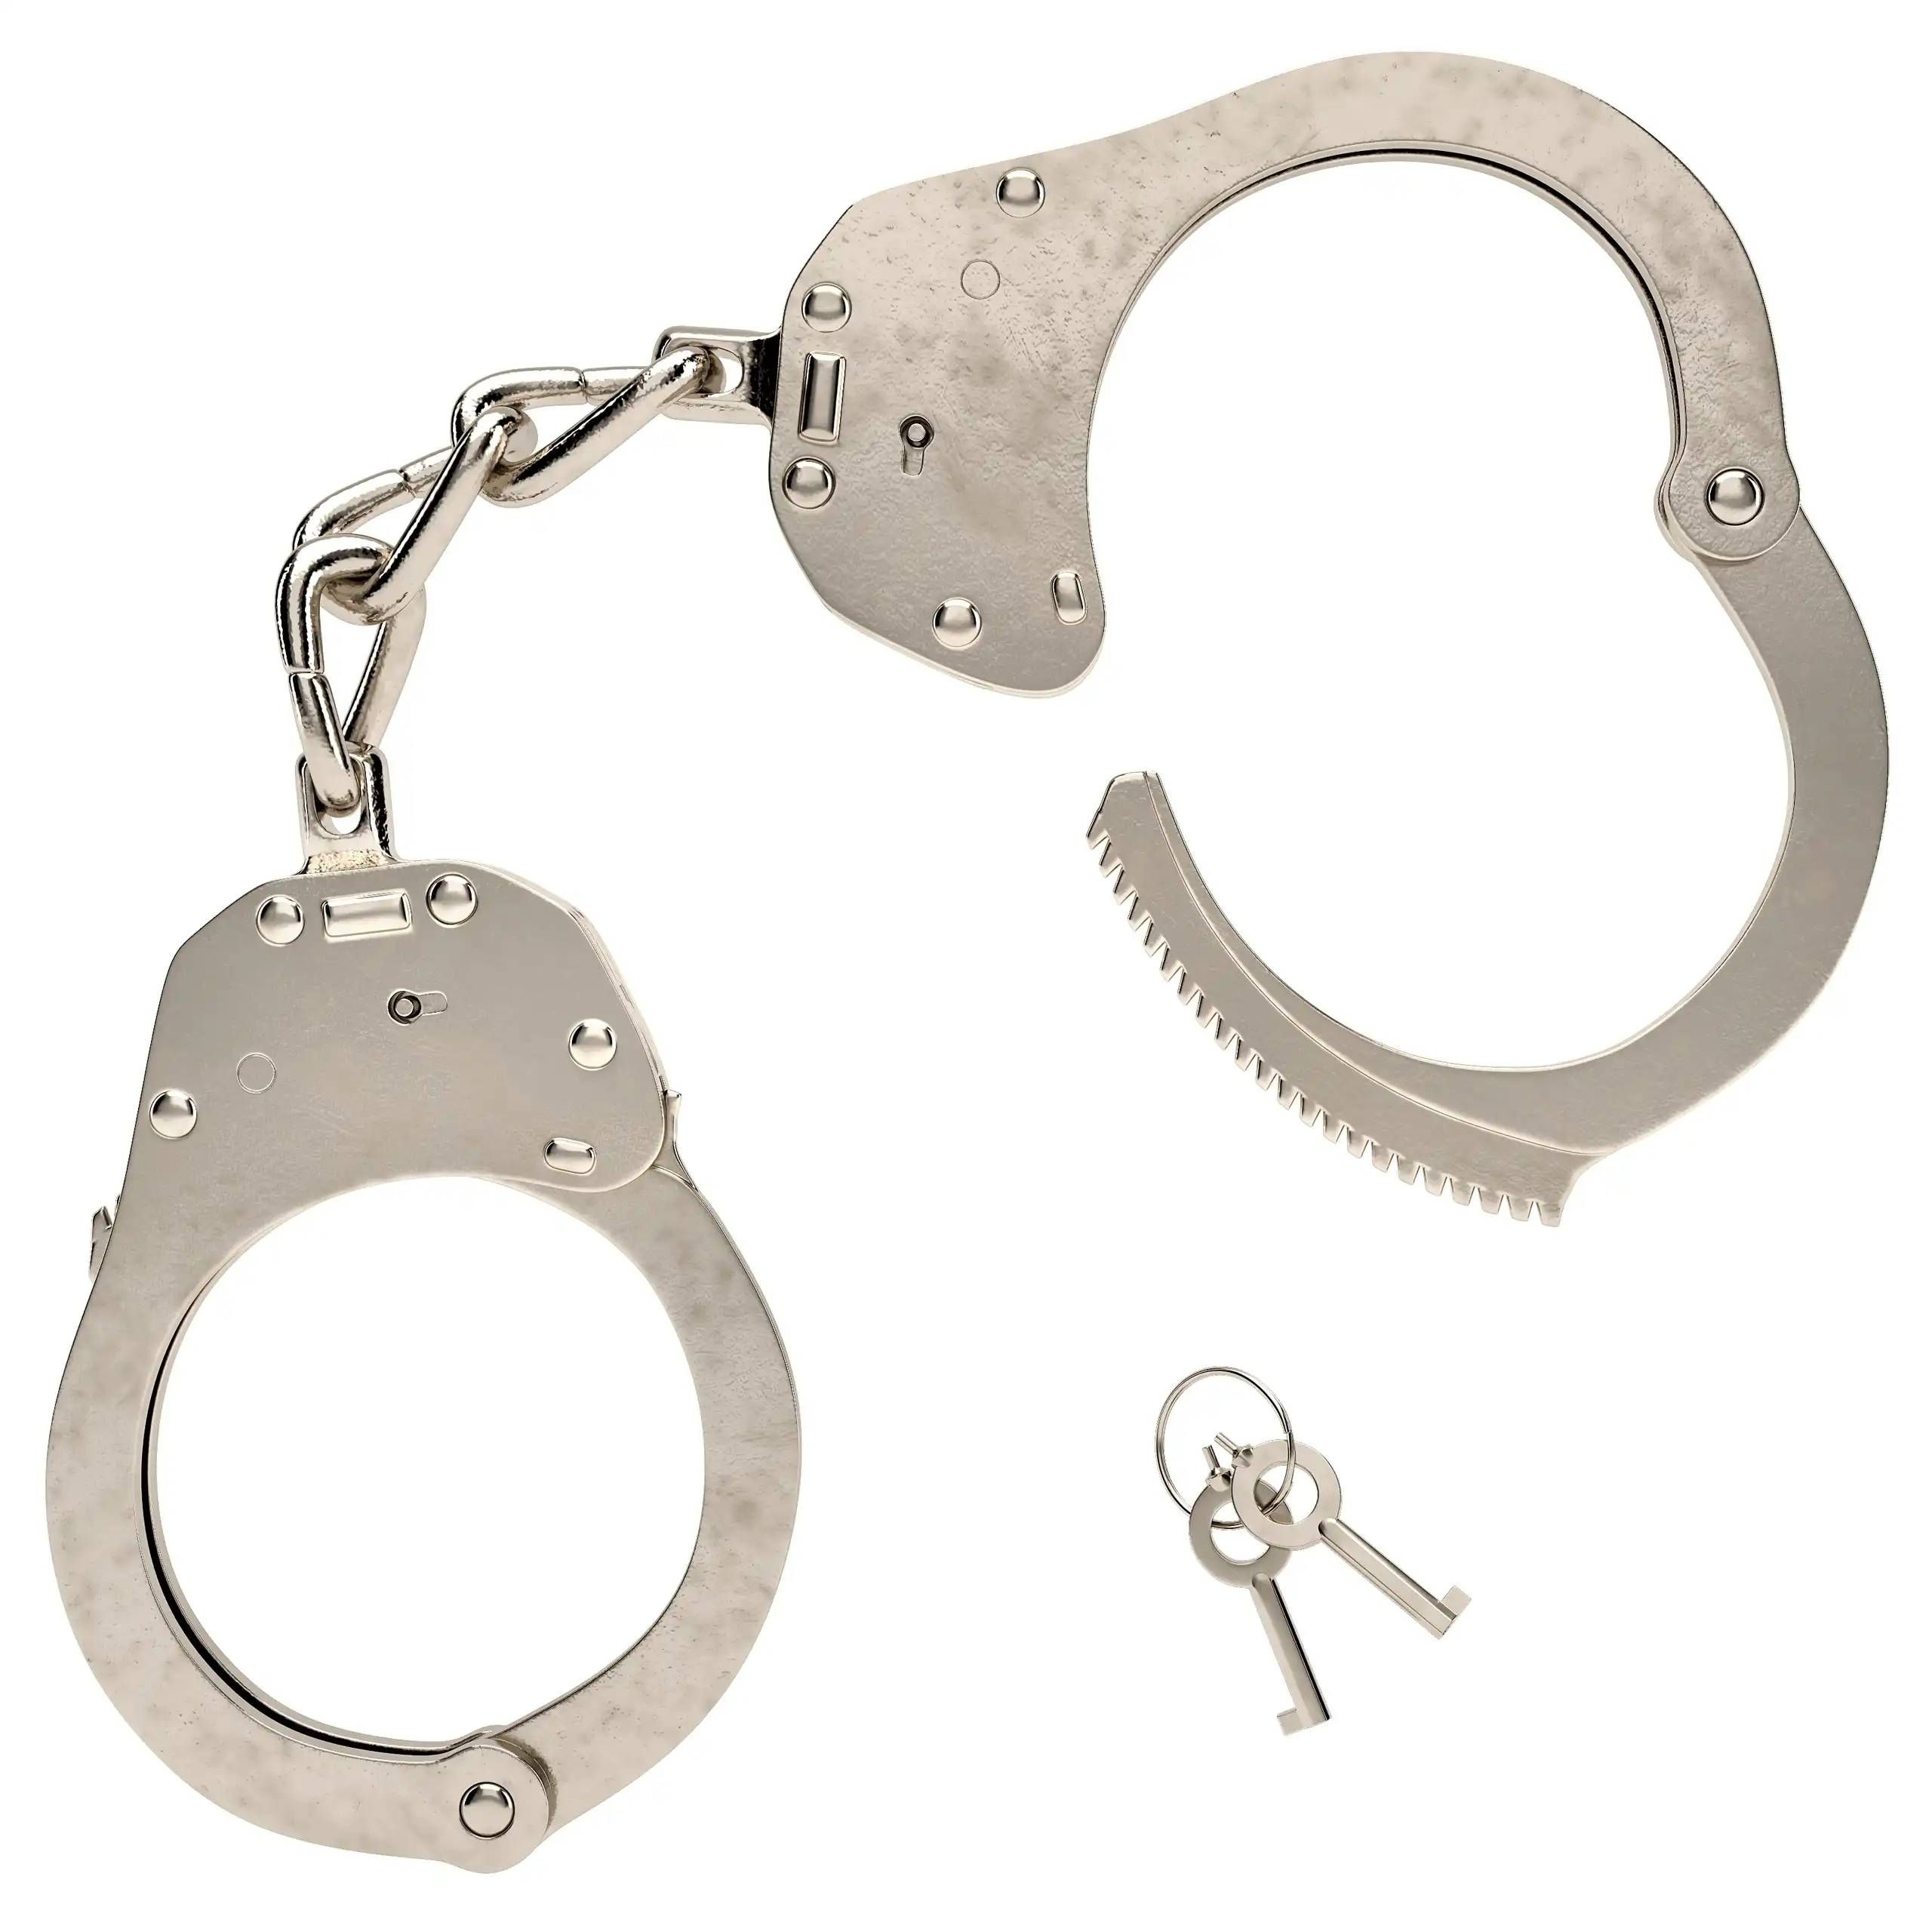 Police Handcuffs 3D Model